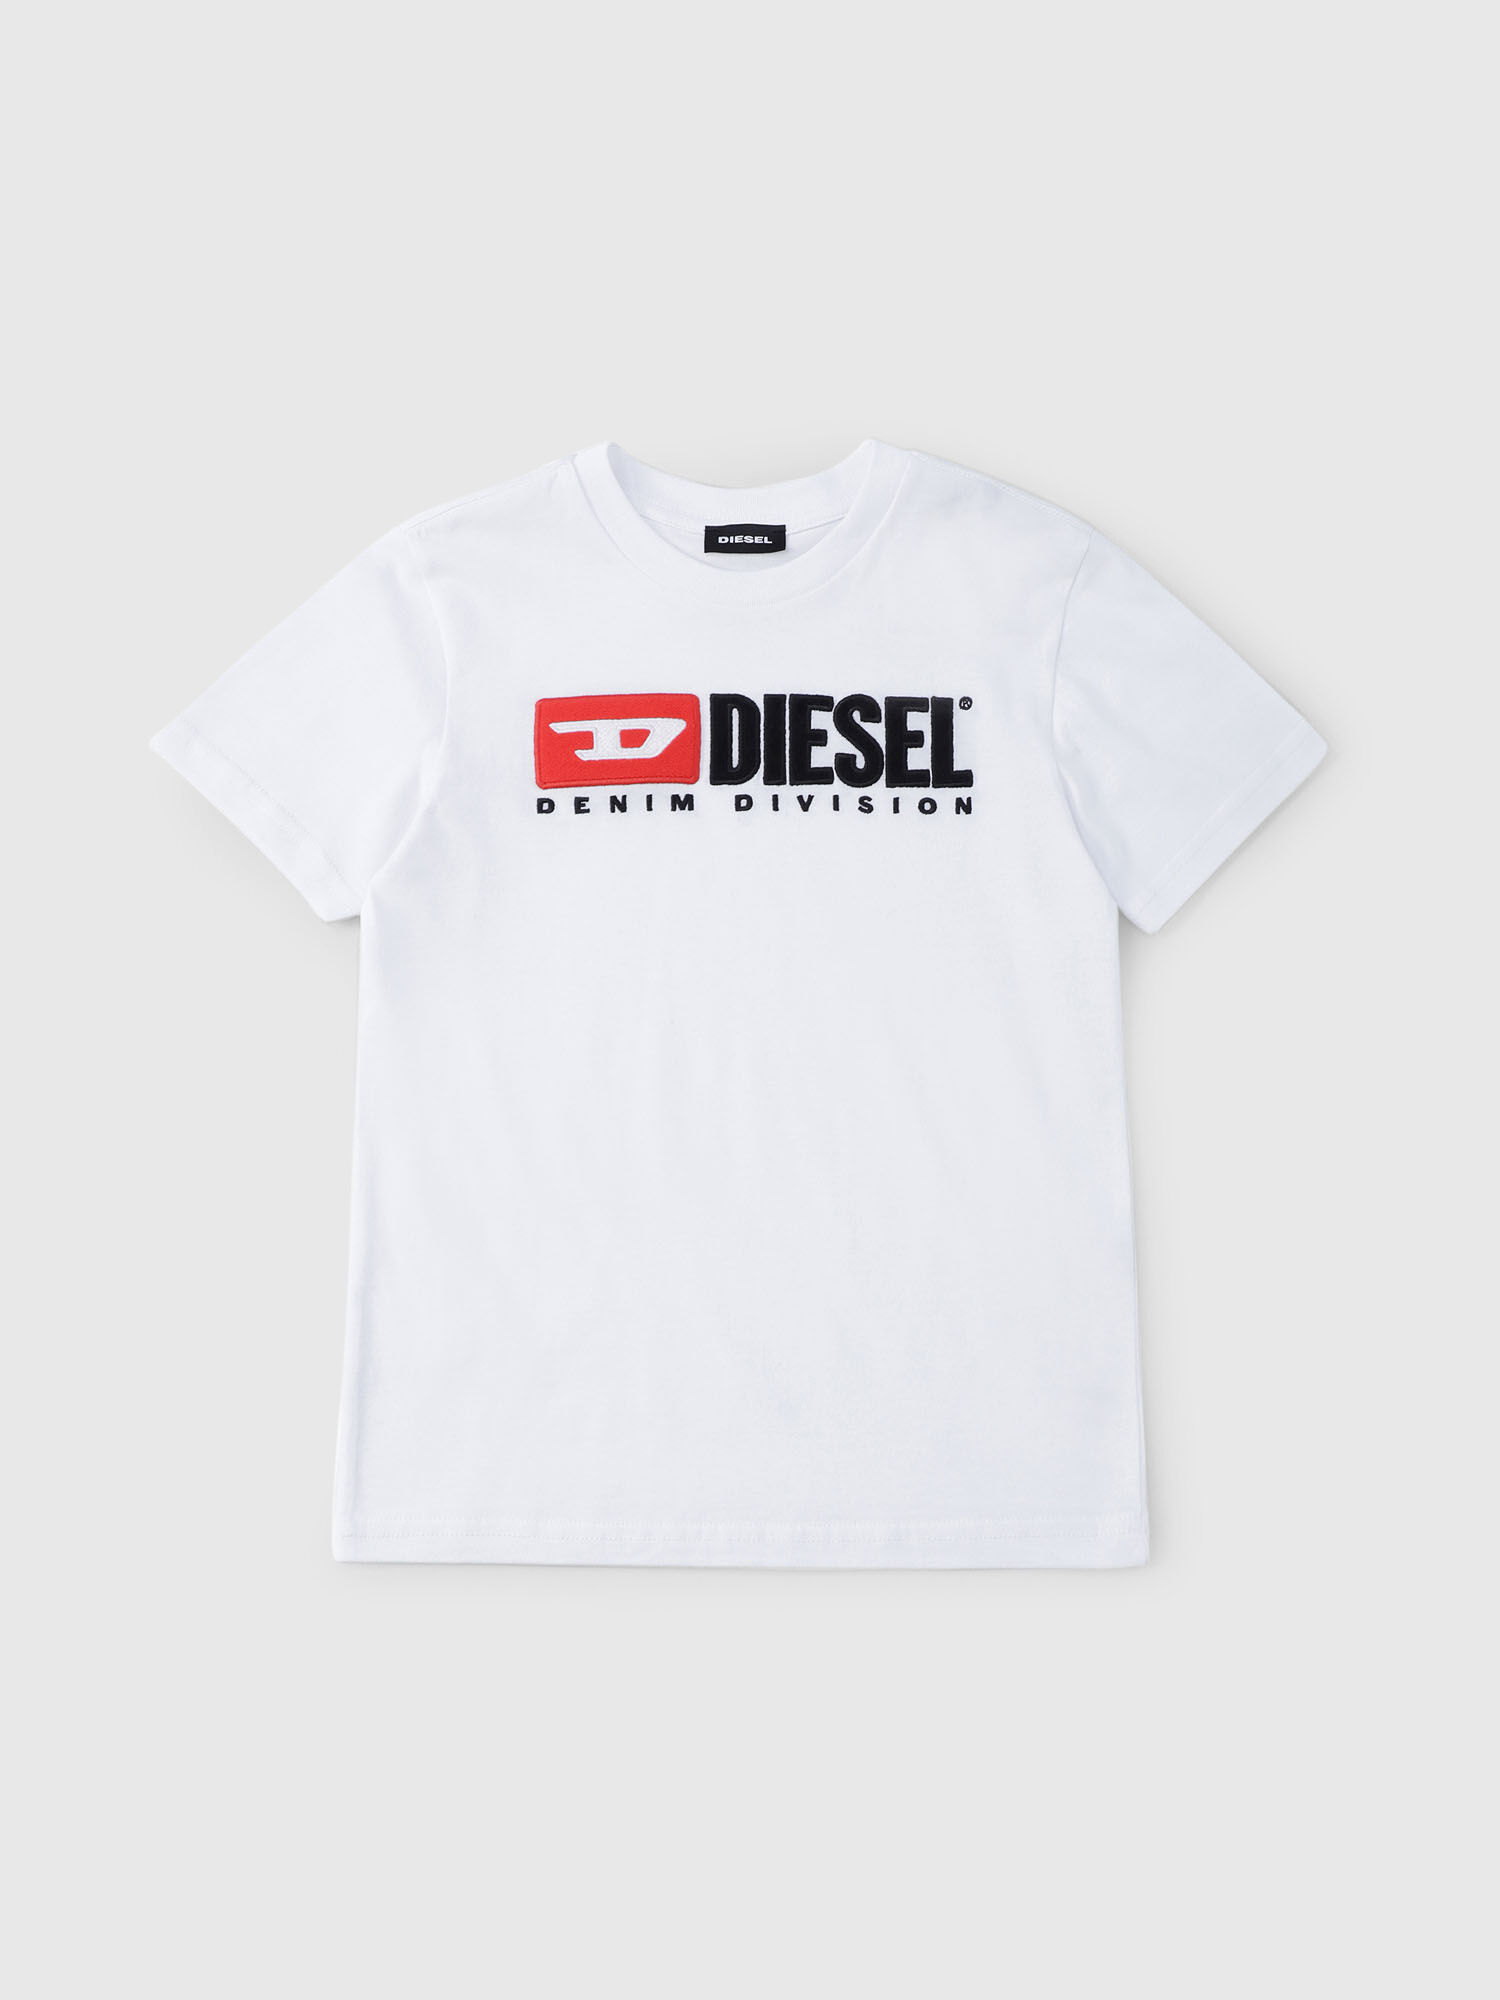 Diesel - TJUSTDIVISION,  - Image 1